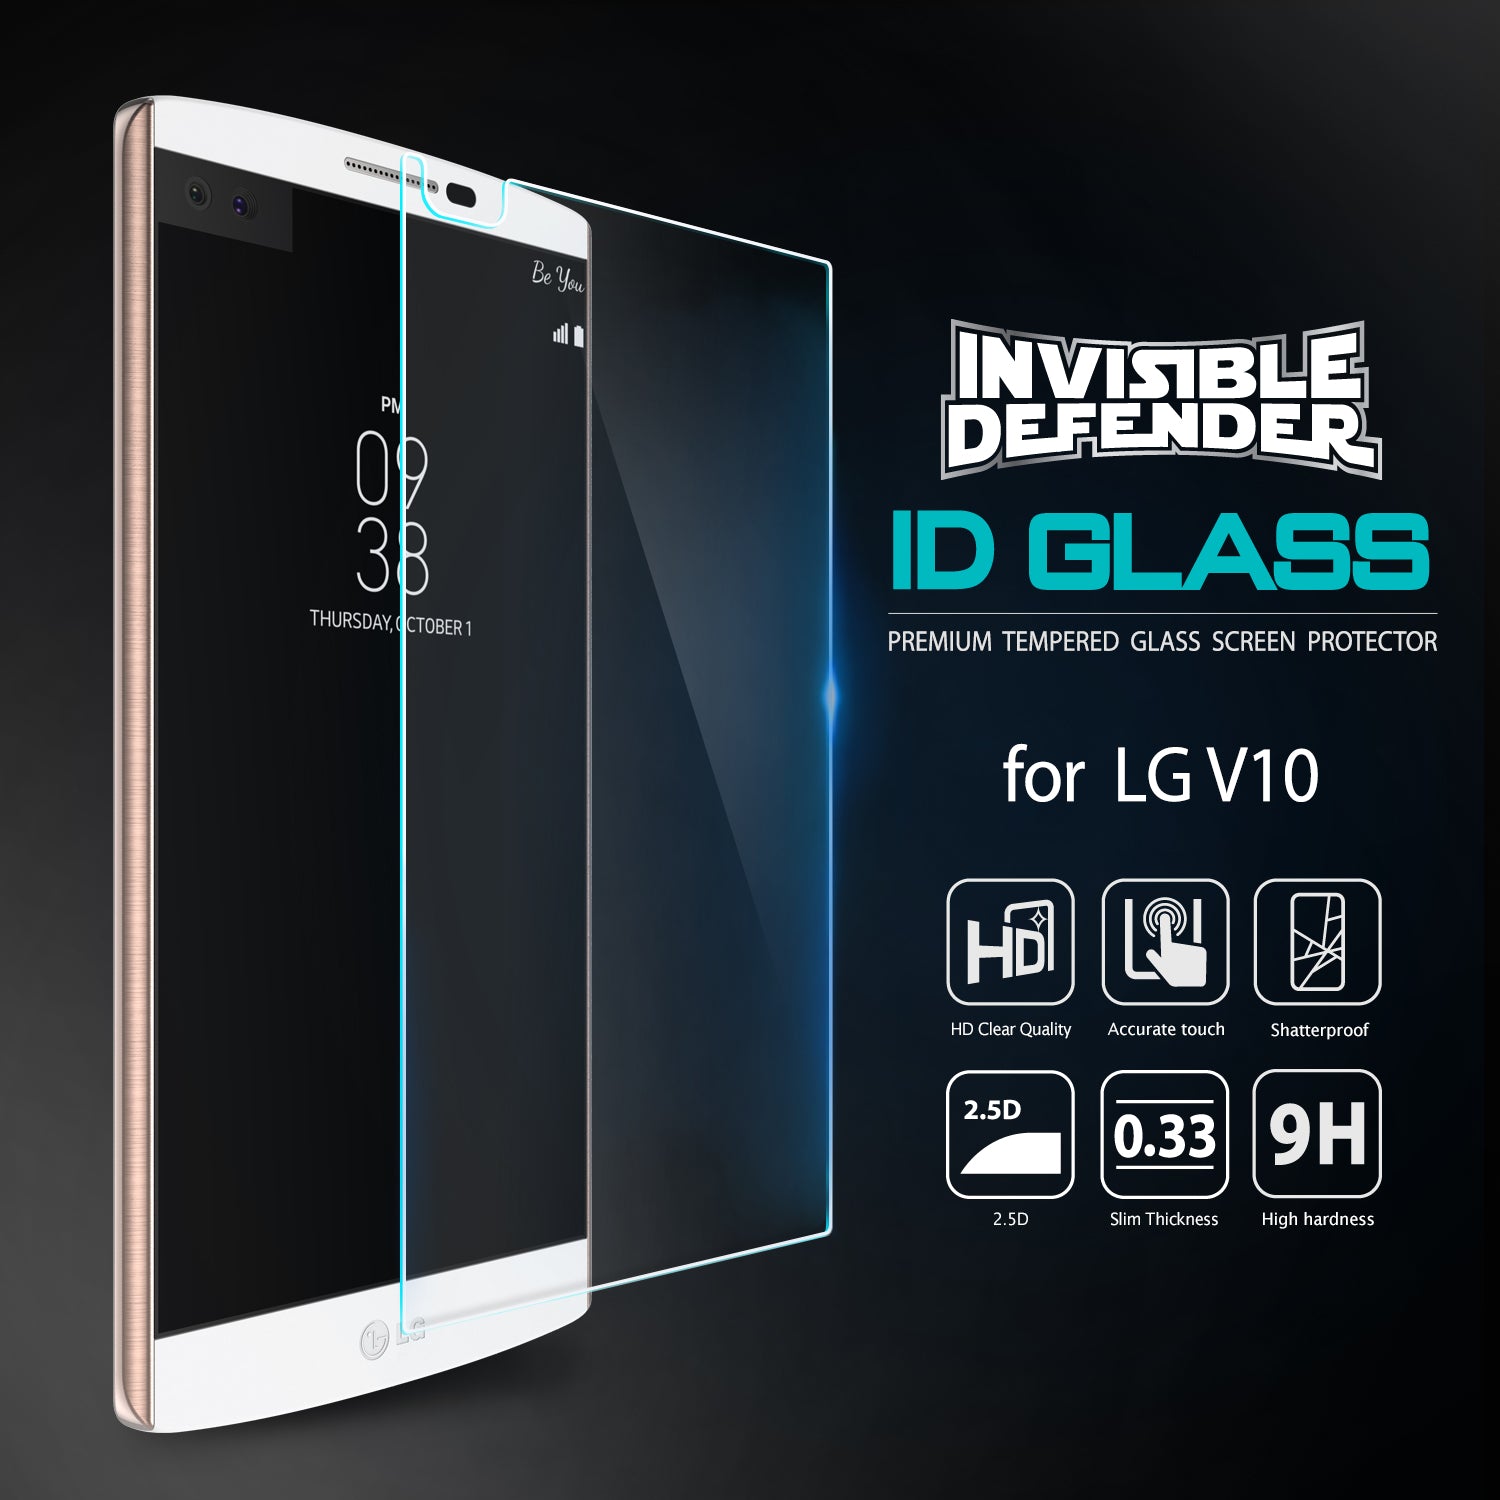 lg v10, ringke invisible defender 0.33mm tempered glass screen protector